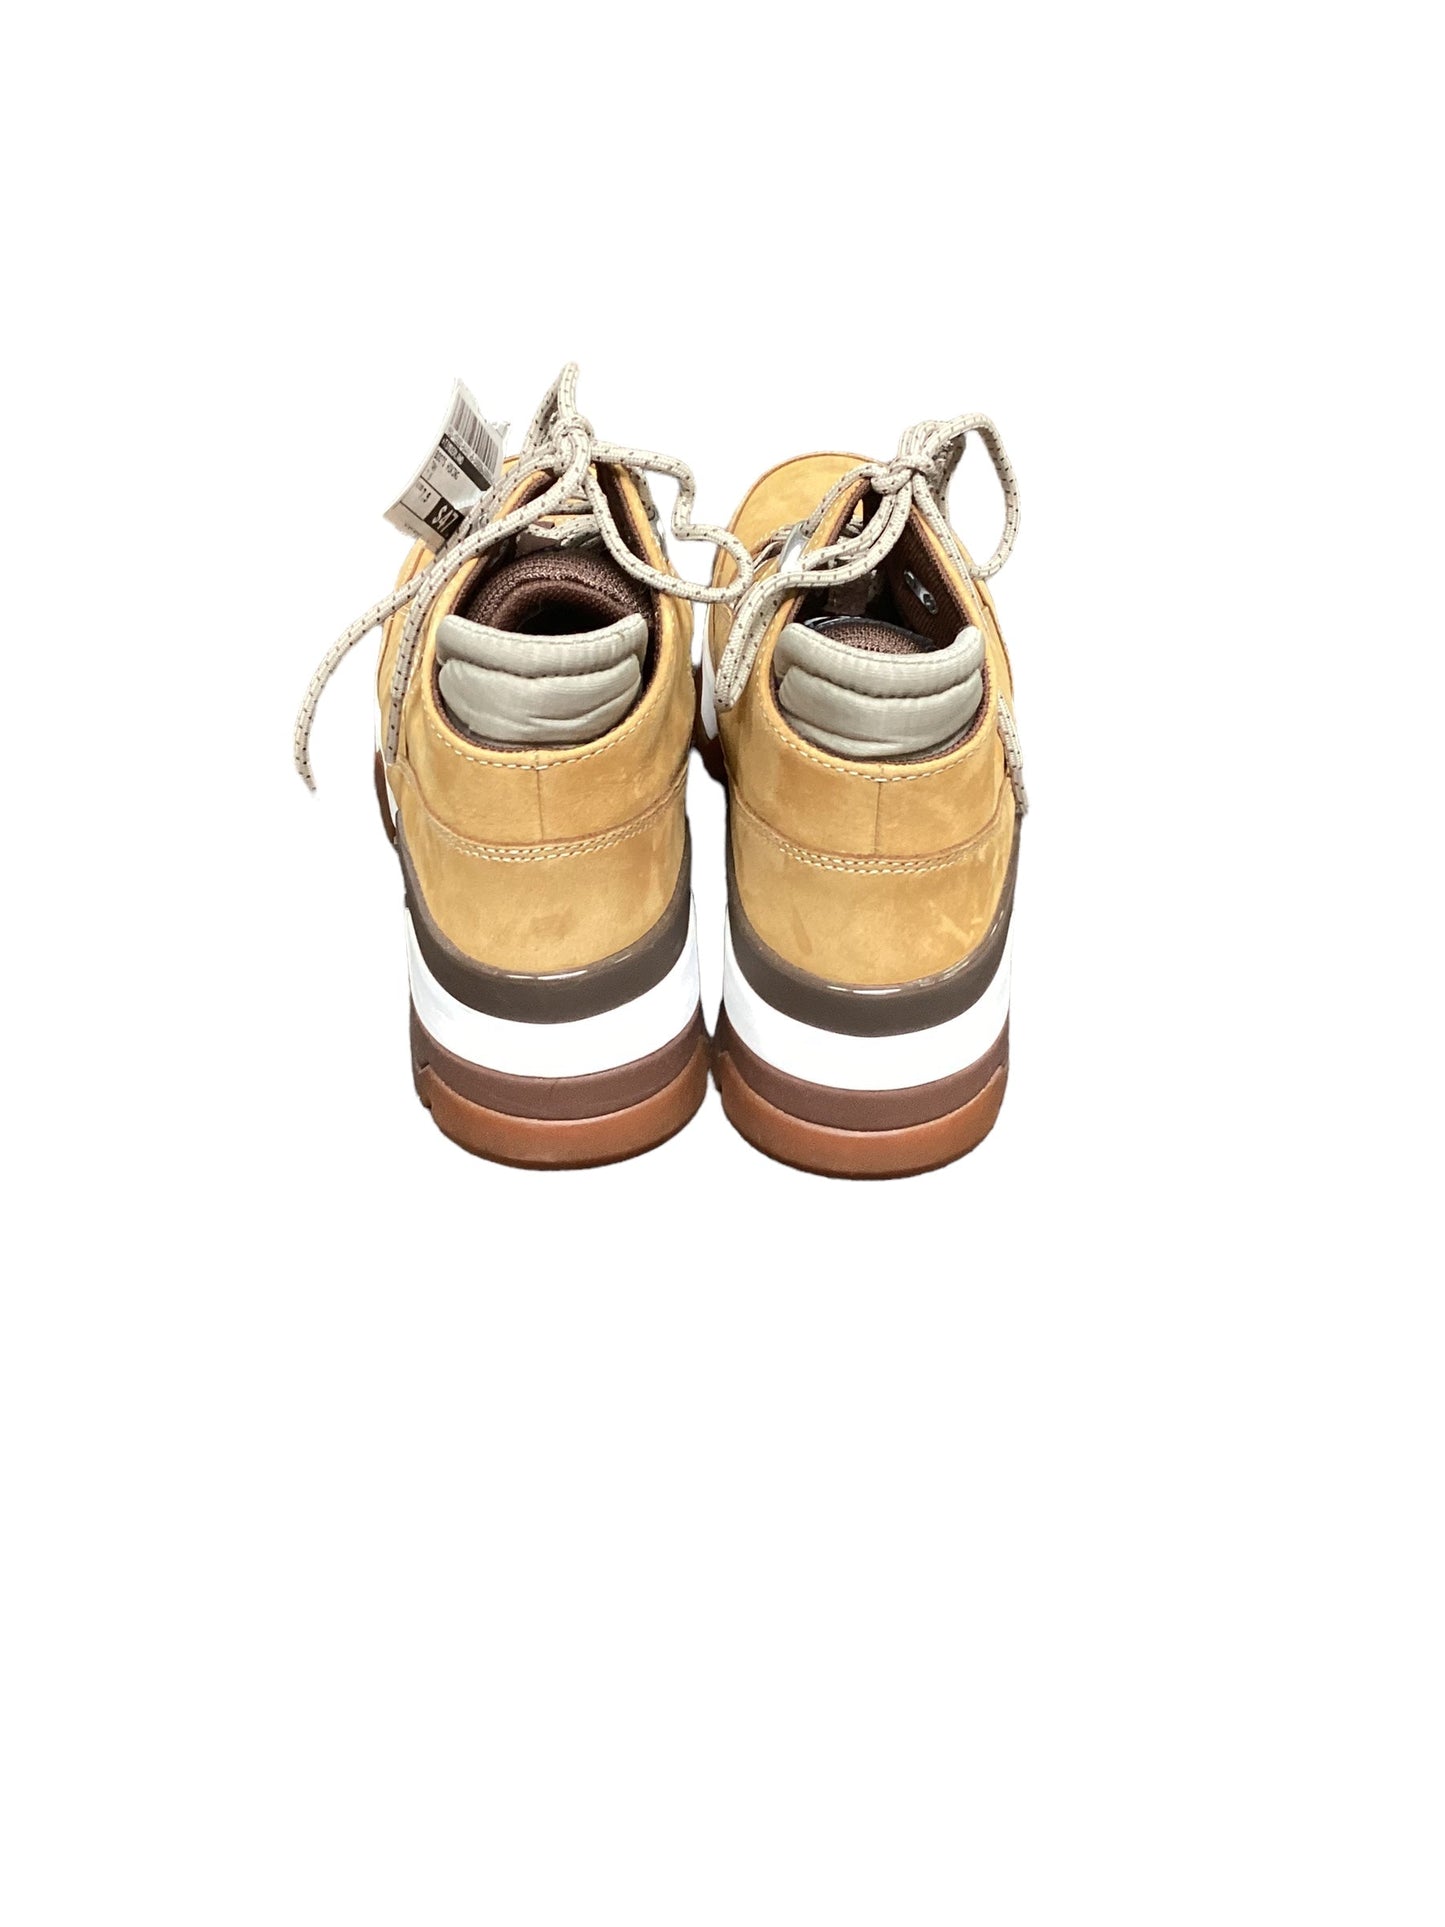 Tan Boots Hiking Timberland, Size 7.5